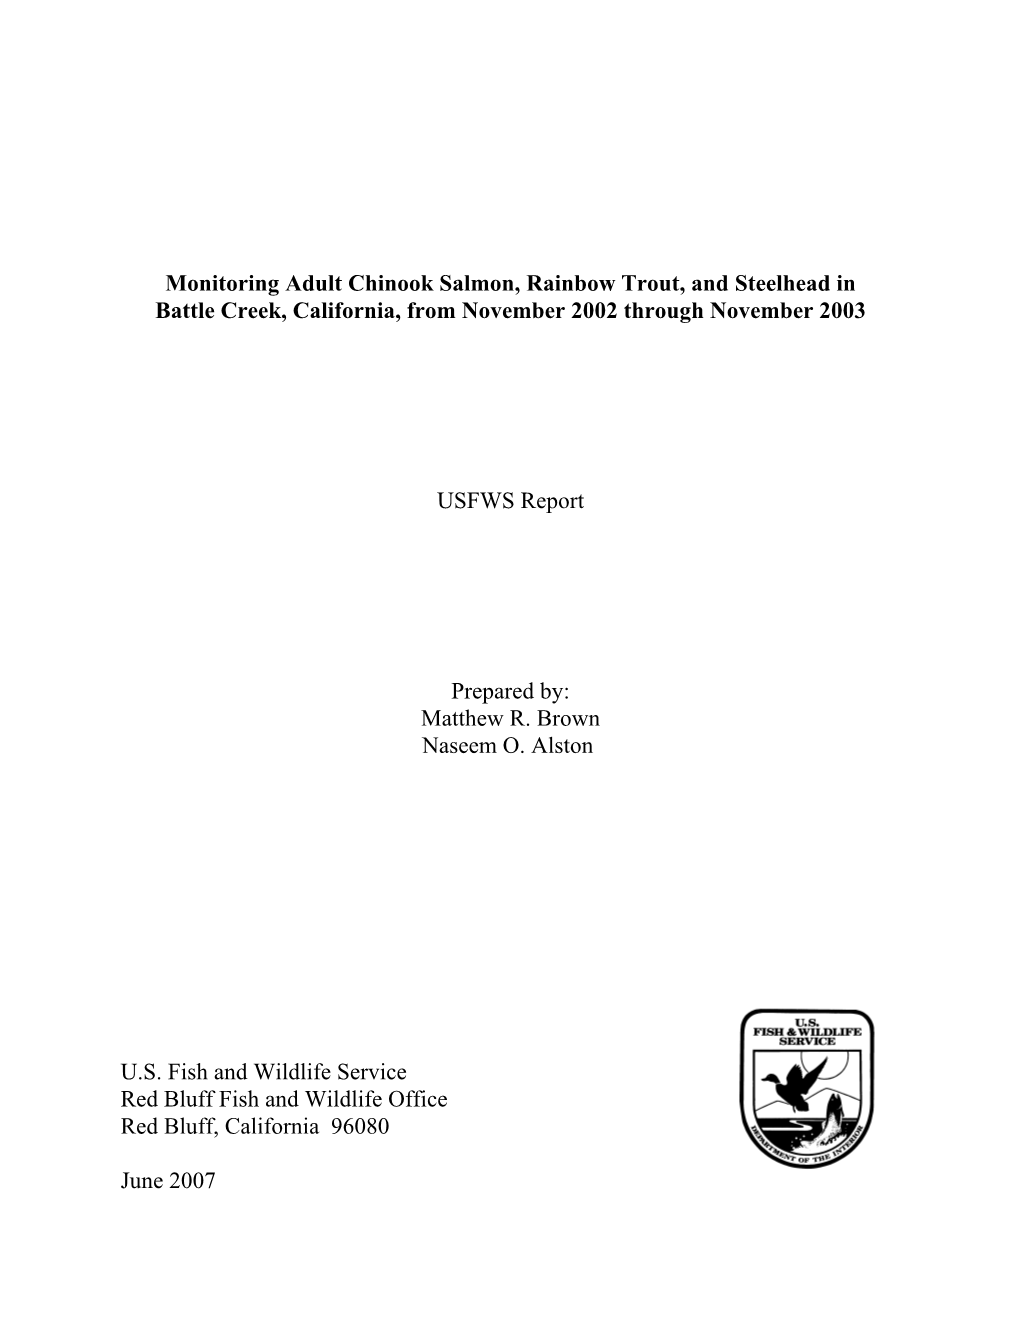 2003 Battle Creek Adult Monitoring Report